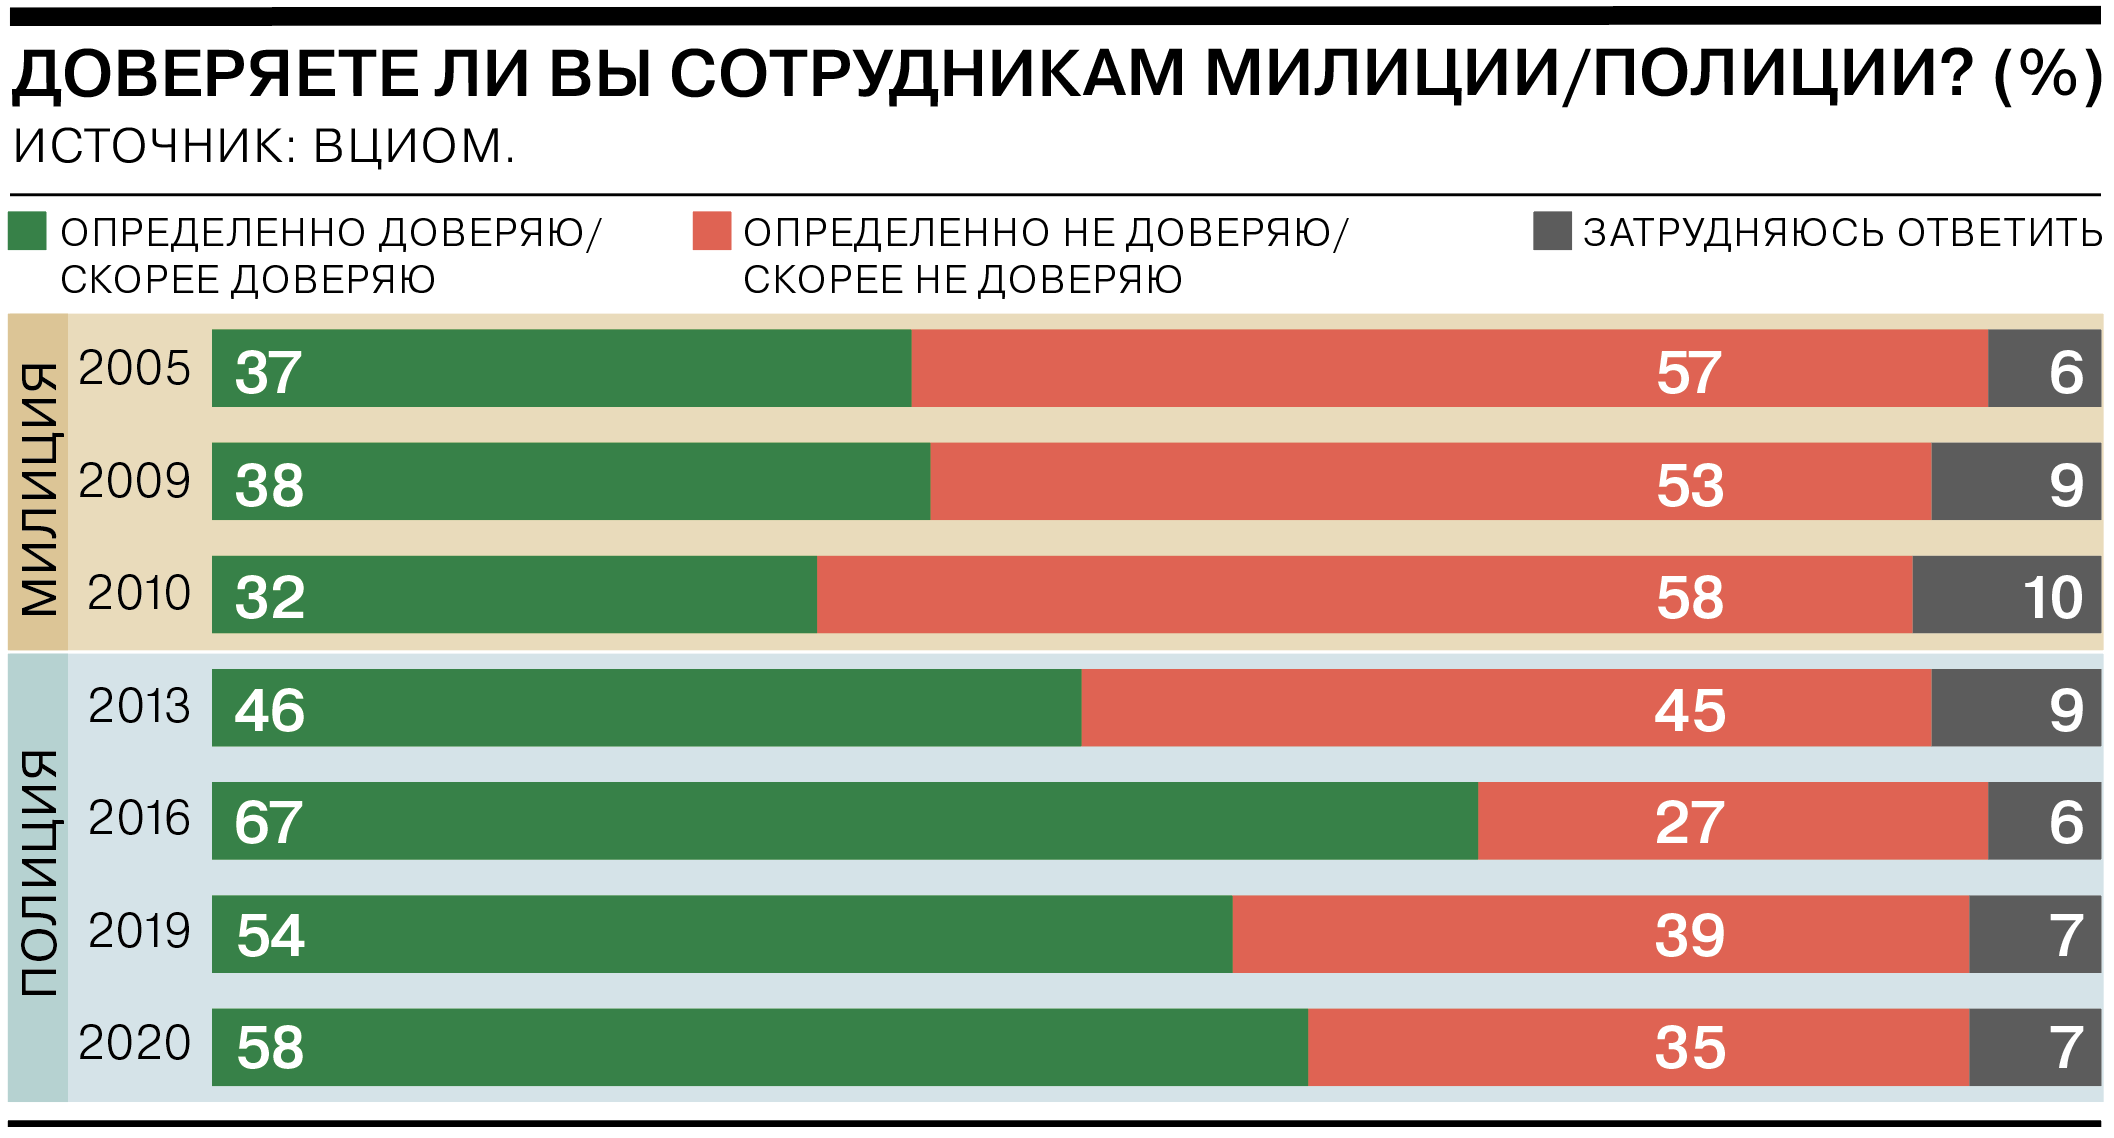 https://im.kommersant.ru/ISSUES.PHOTO/CORP/2021/02/05/4%D0%B4%D0%BE%D0%B2%D0%B5%D1%80%D0%B8%D0%B5.png